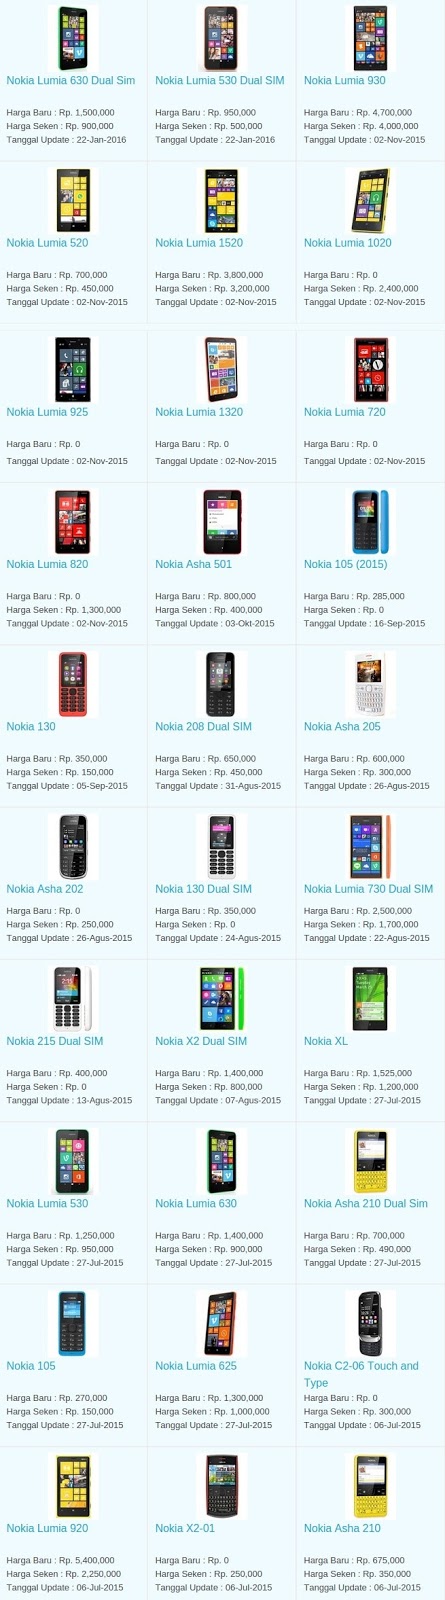 Daftar Harga Hp Terbaru Nokia Mei 2016